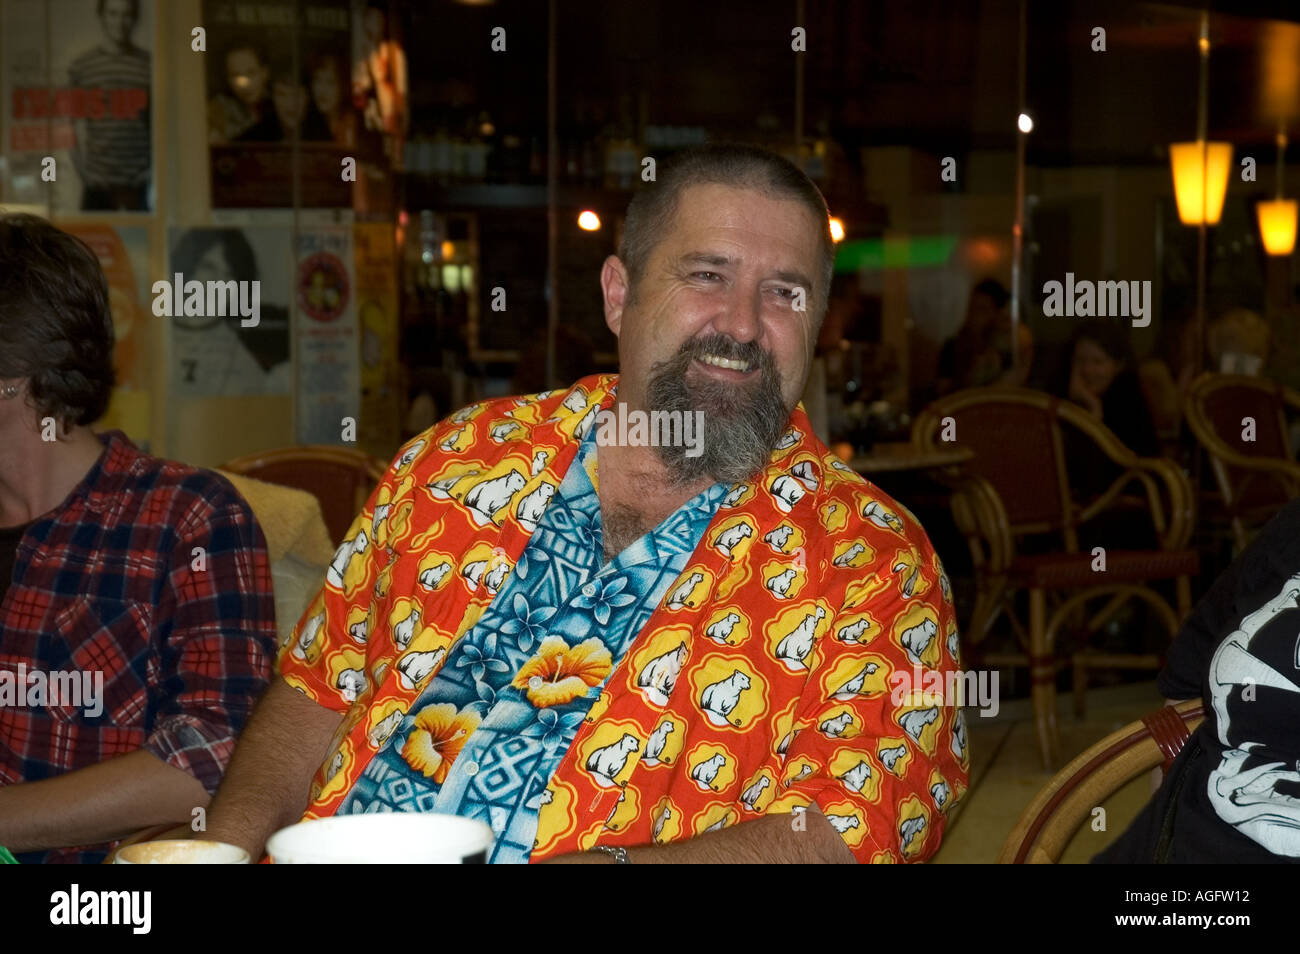 Alan wearing 2 shirts being twice as loud Bundy Bundaberg rum and Hawaiian Stock Photo